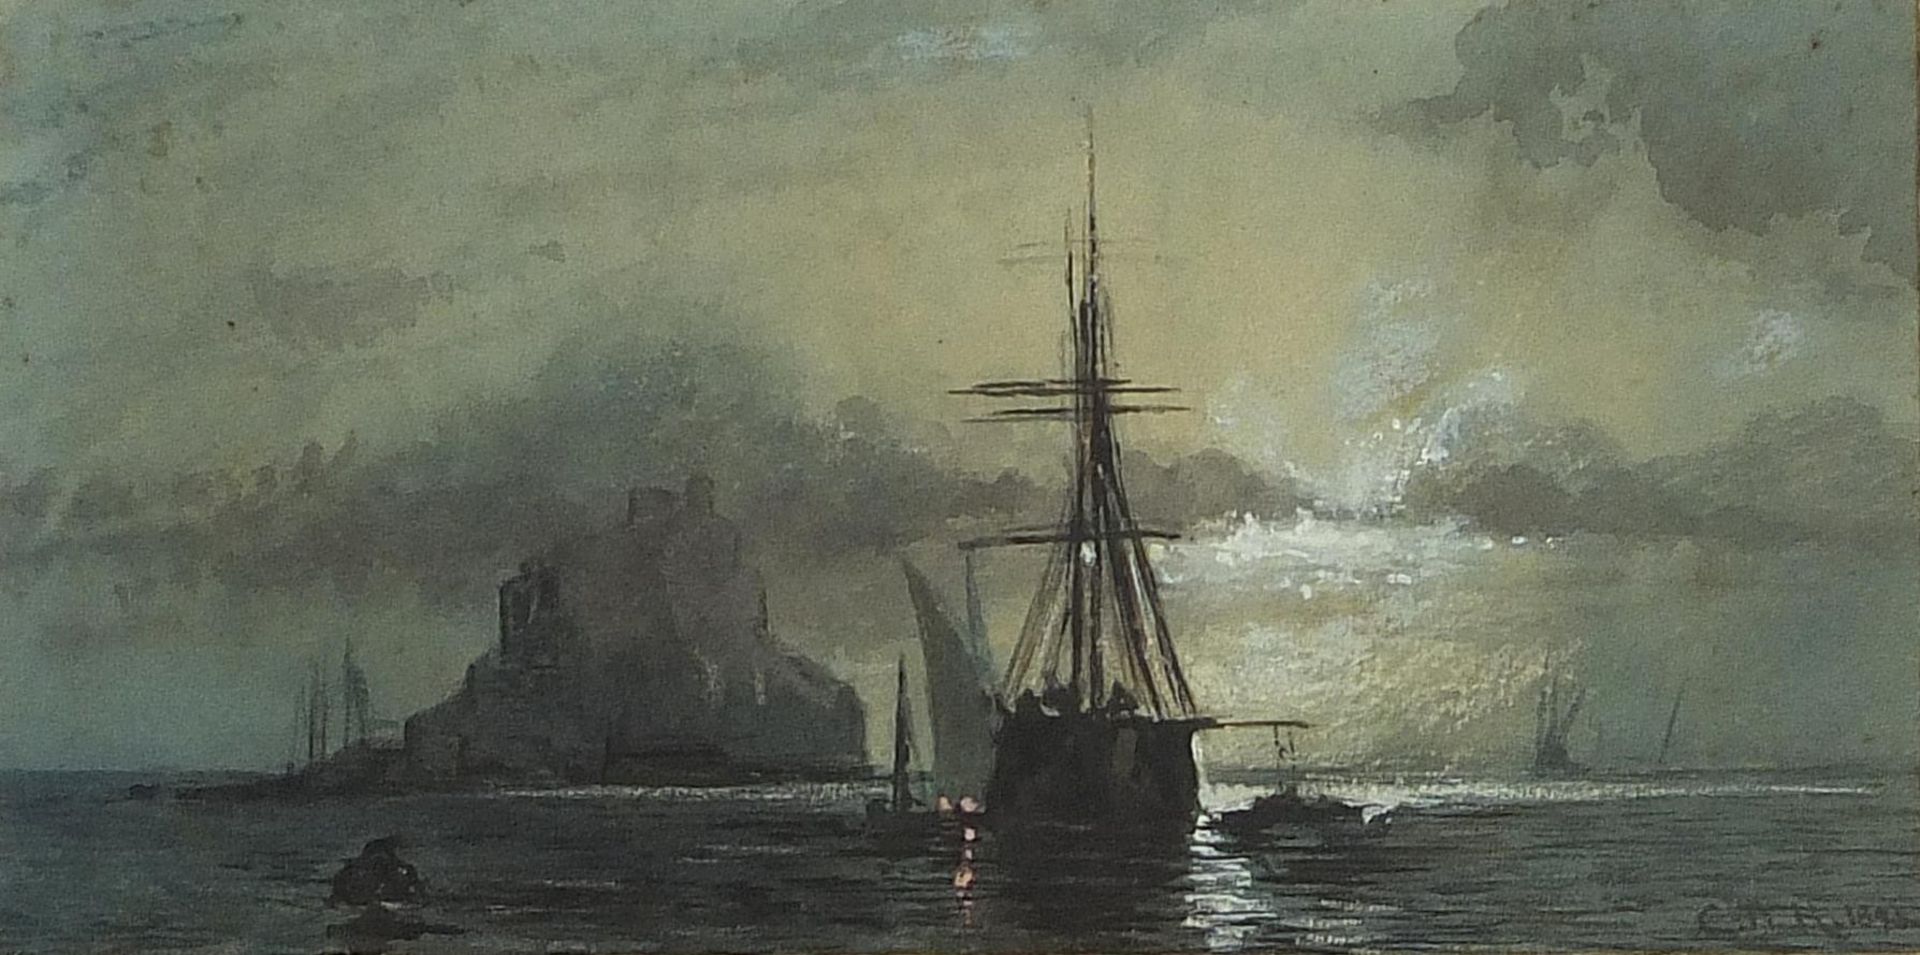 Charles Napier Hemy 1895 - St Michael's Mount, Cornwall, late 19th century maritime interest